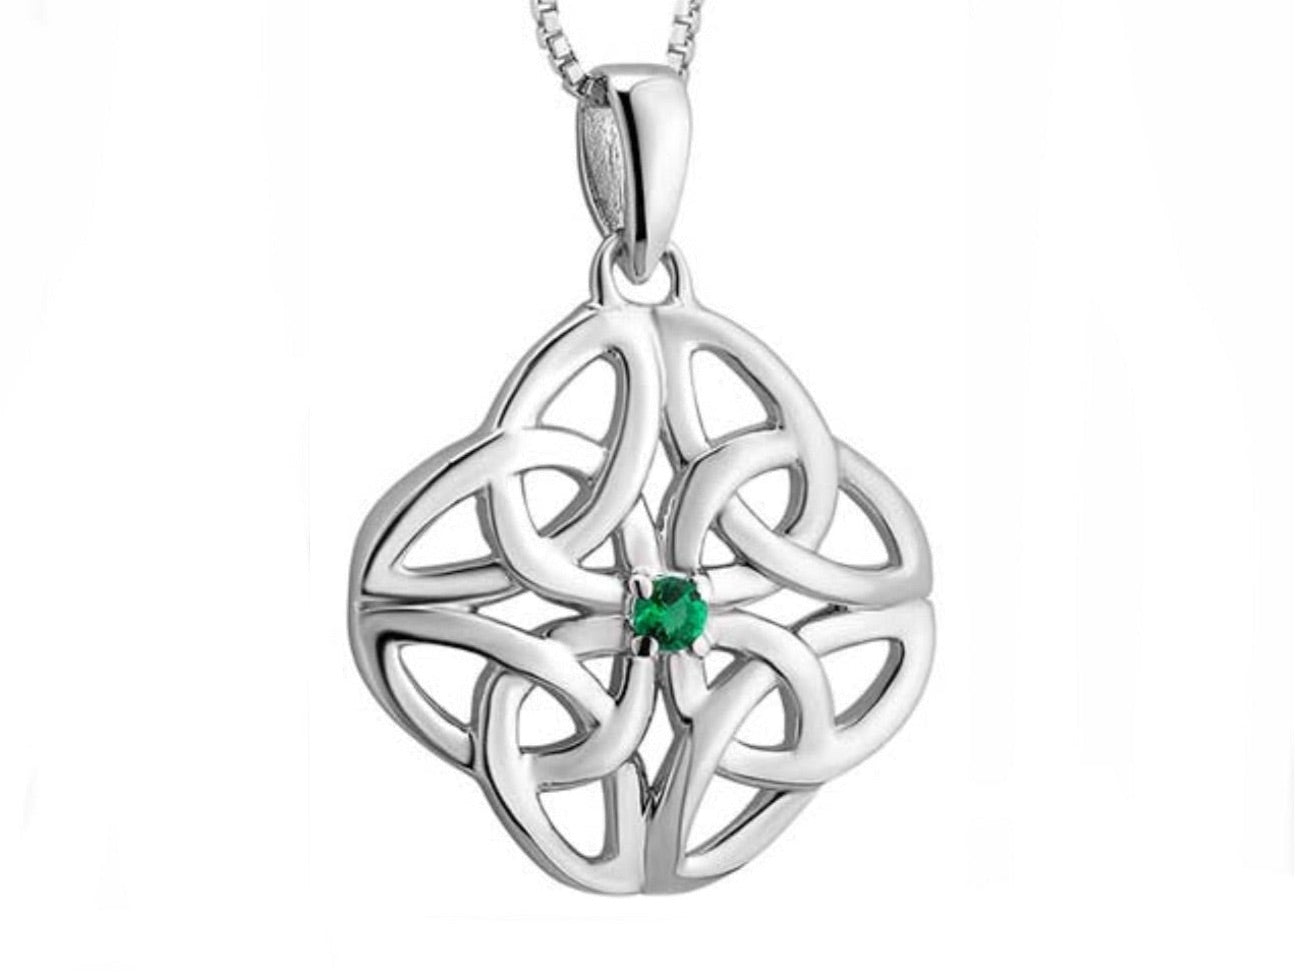 S46607 Four Trinity Knot w/ Green Crystal Pendant